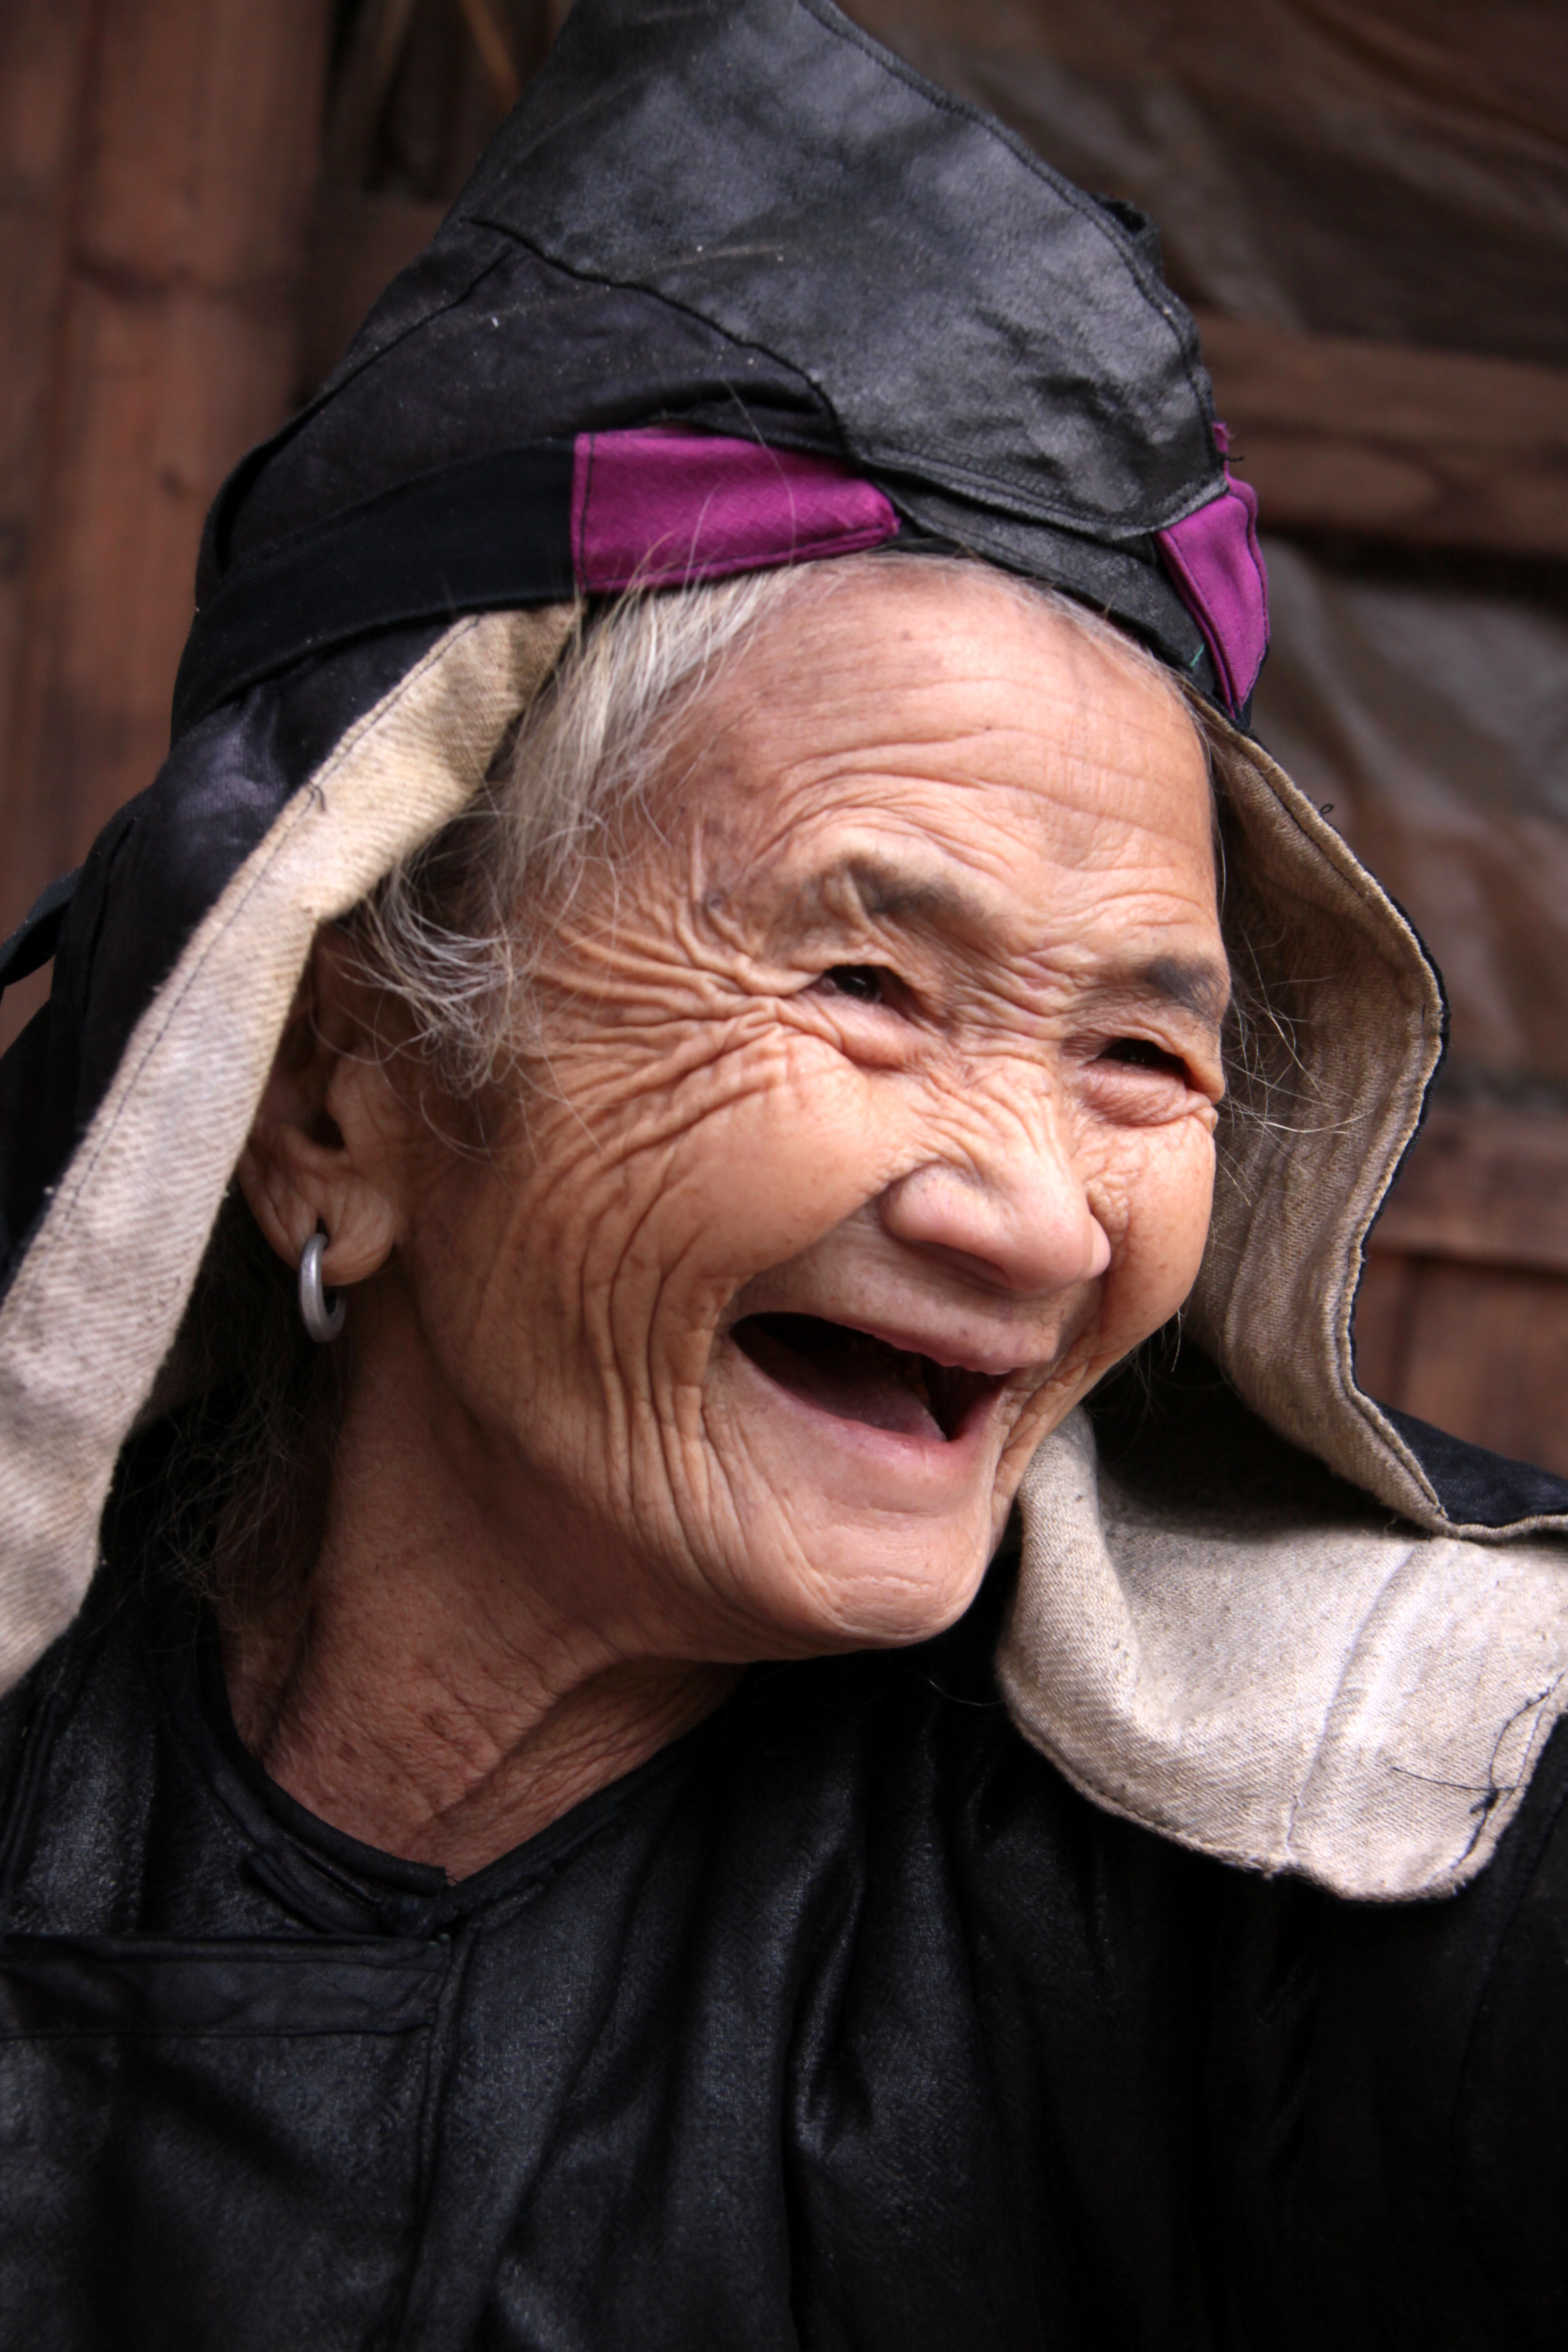 Now that's a happy smile! | Gorgeous Aging | Pinterest | Happy smile ...